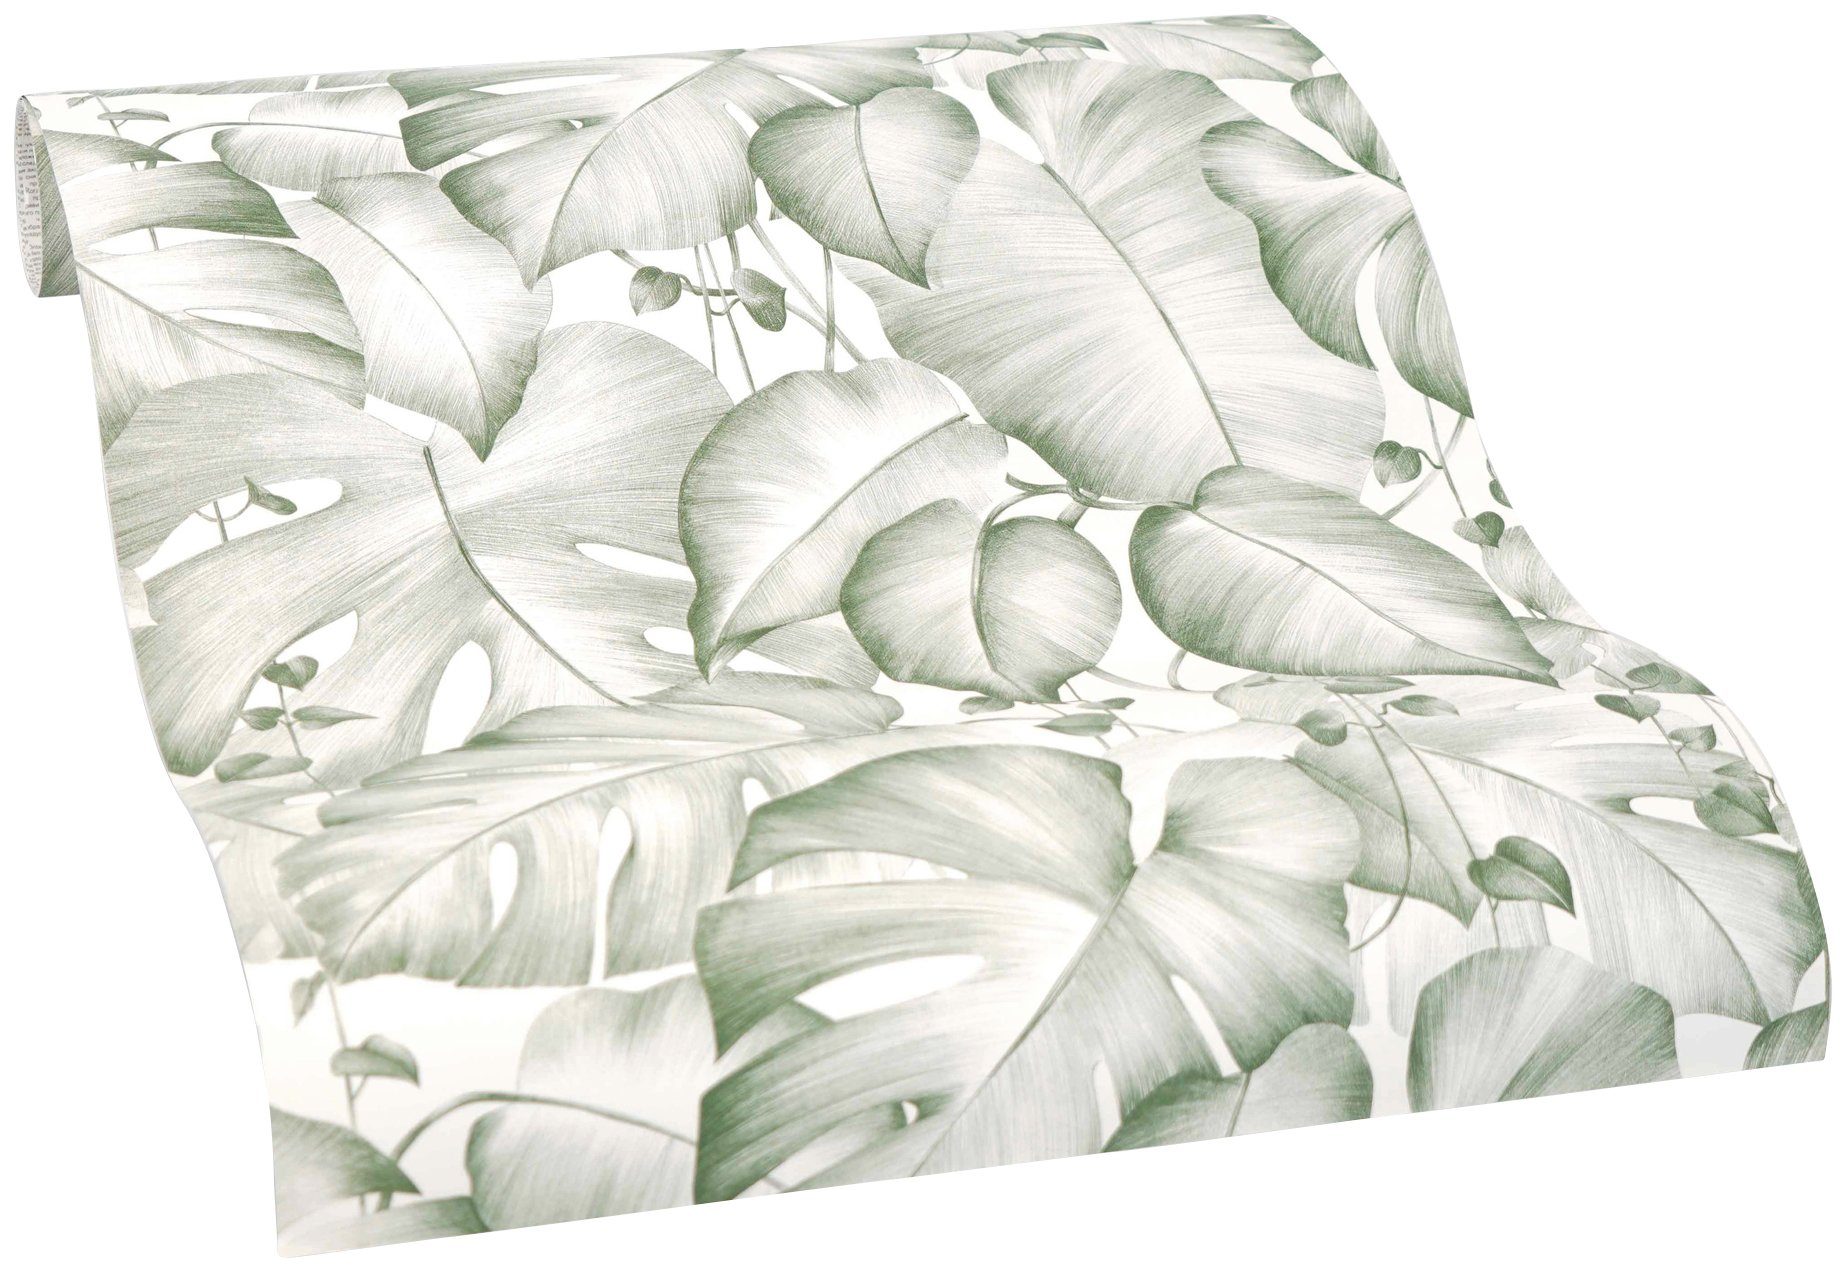 living m Dschungel Panel Up x Grün Weiß Tapete 2,50 Palmen 3D, Vinyltapete Selbstklebend m Panel 0,52 Pop strukturiert, walls floral,